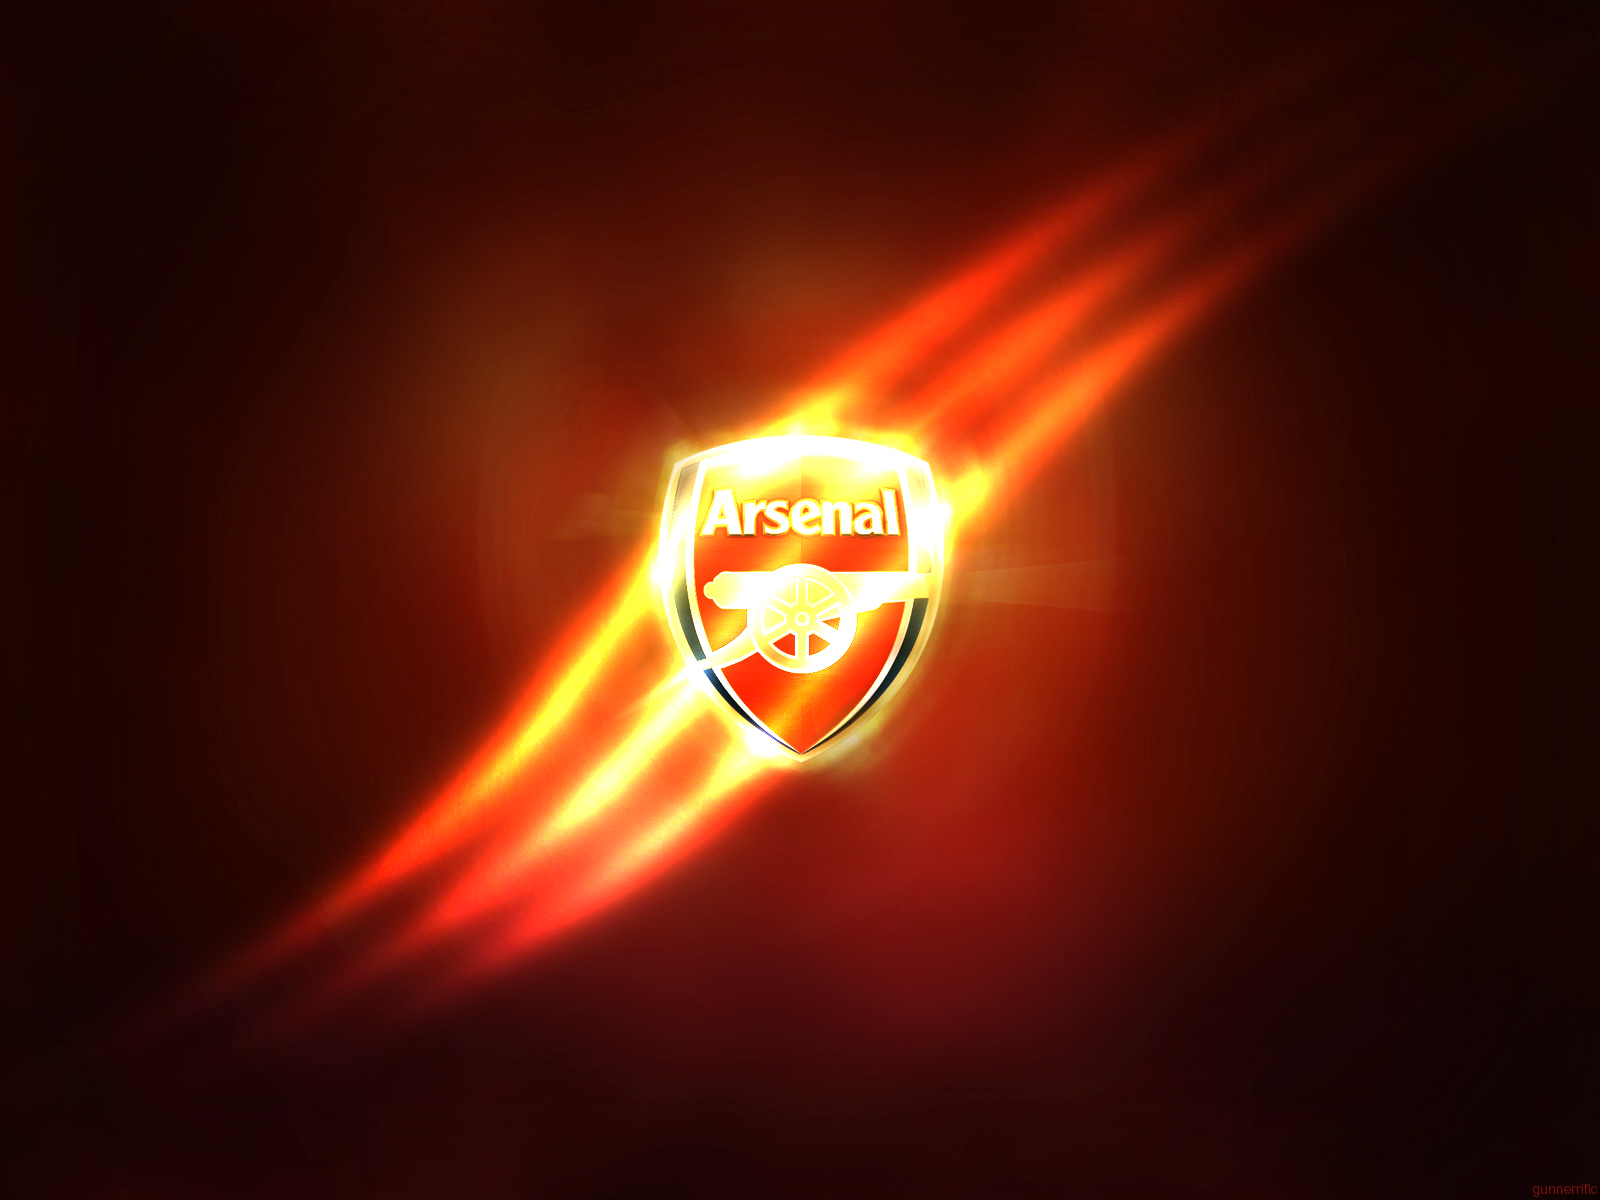 Arsenal logo wallpaper